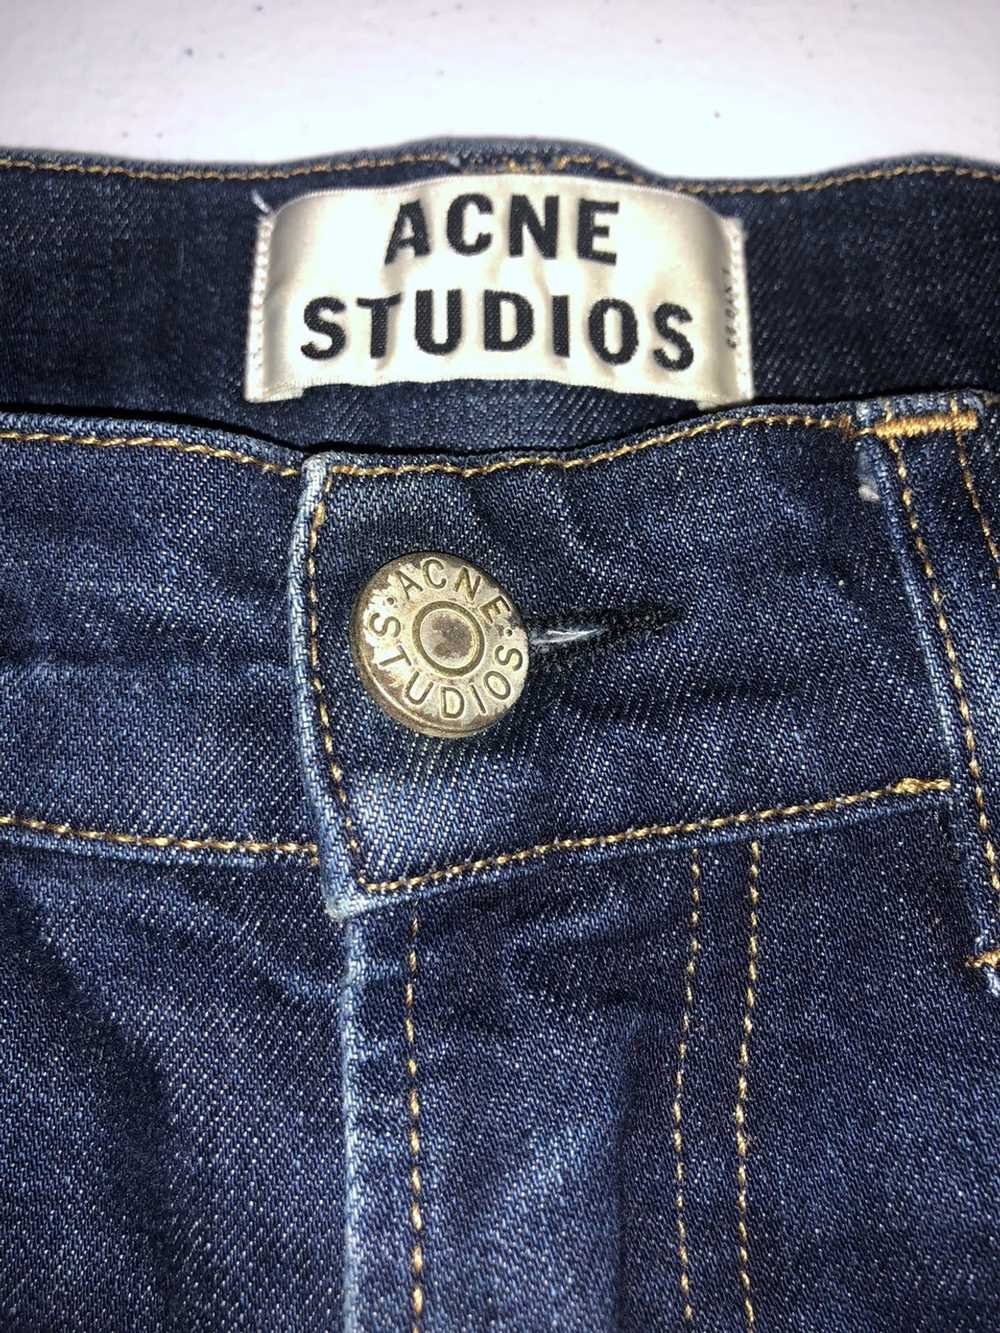 Acne Studios ACE RAW GOTHIC - image 2